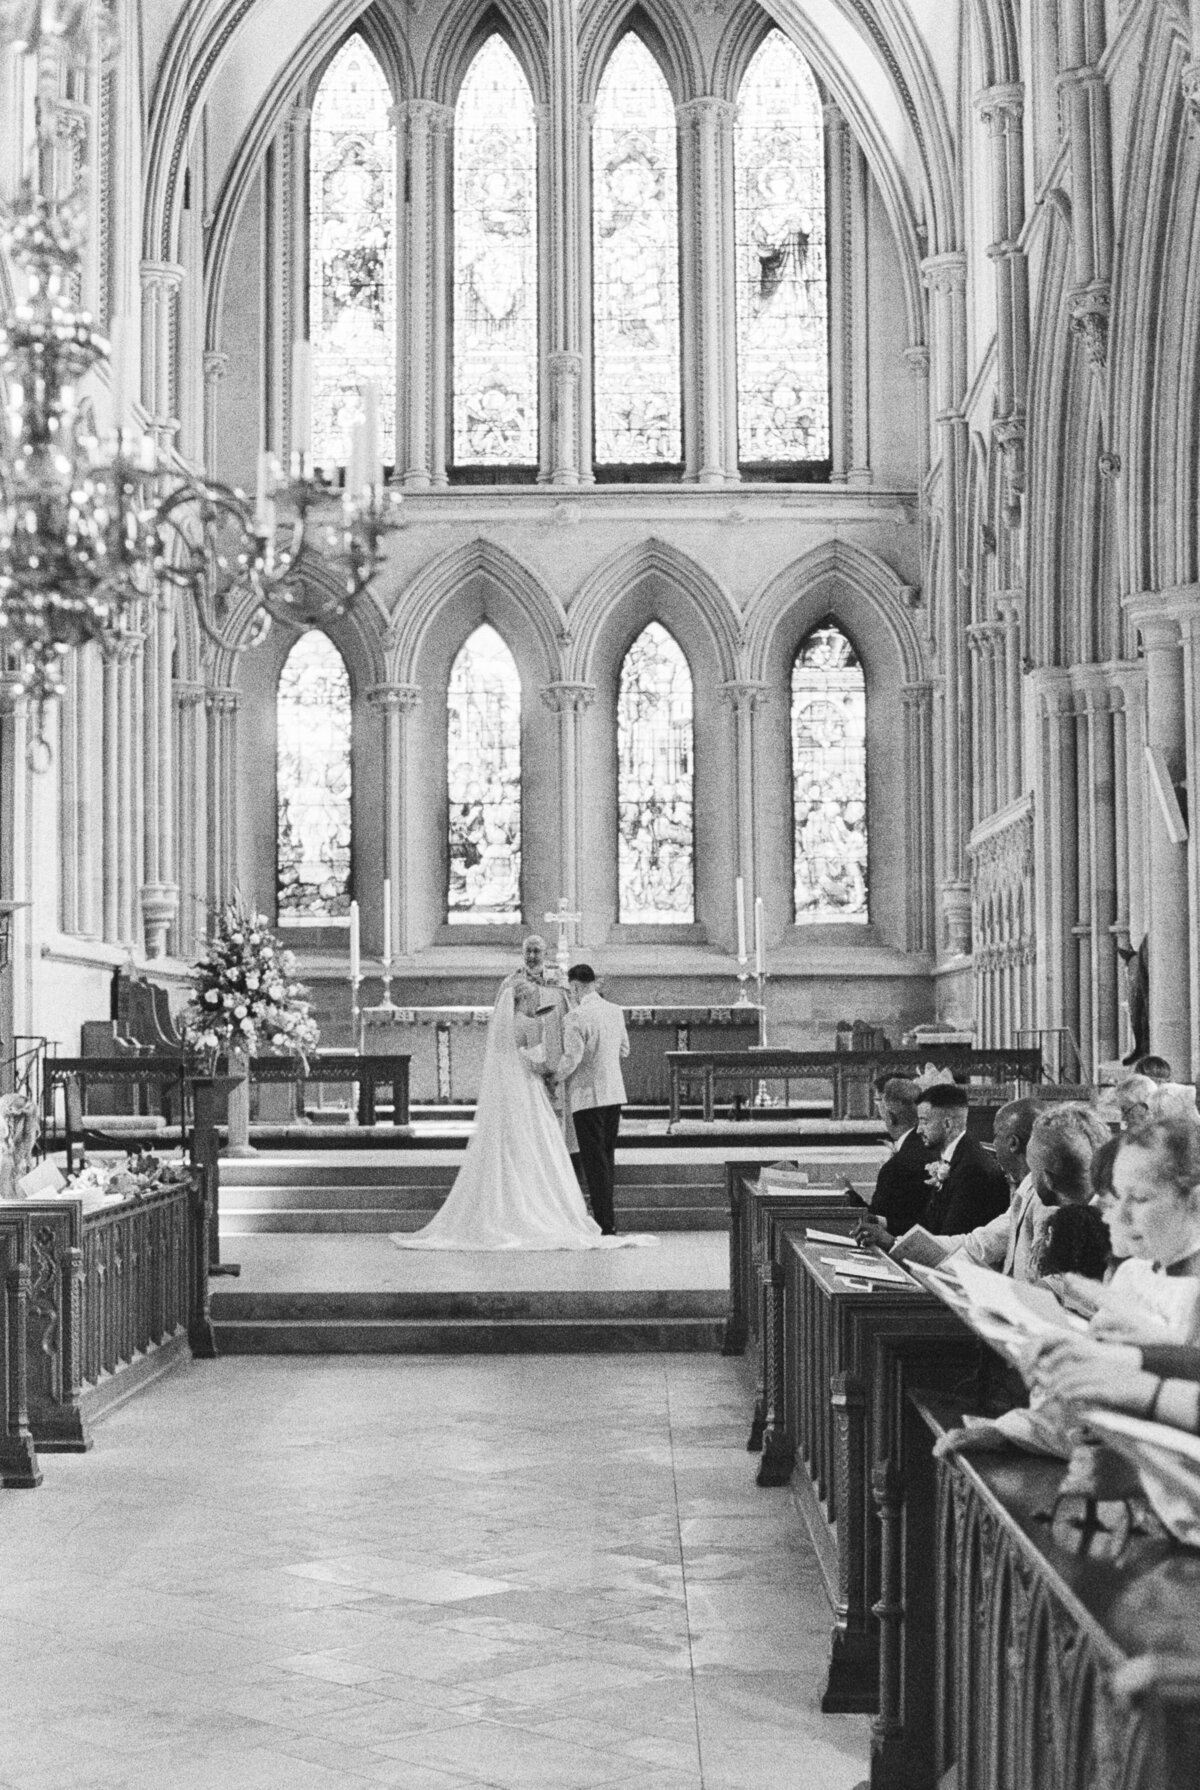 southwell cathedral wedding captured on analog film camera